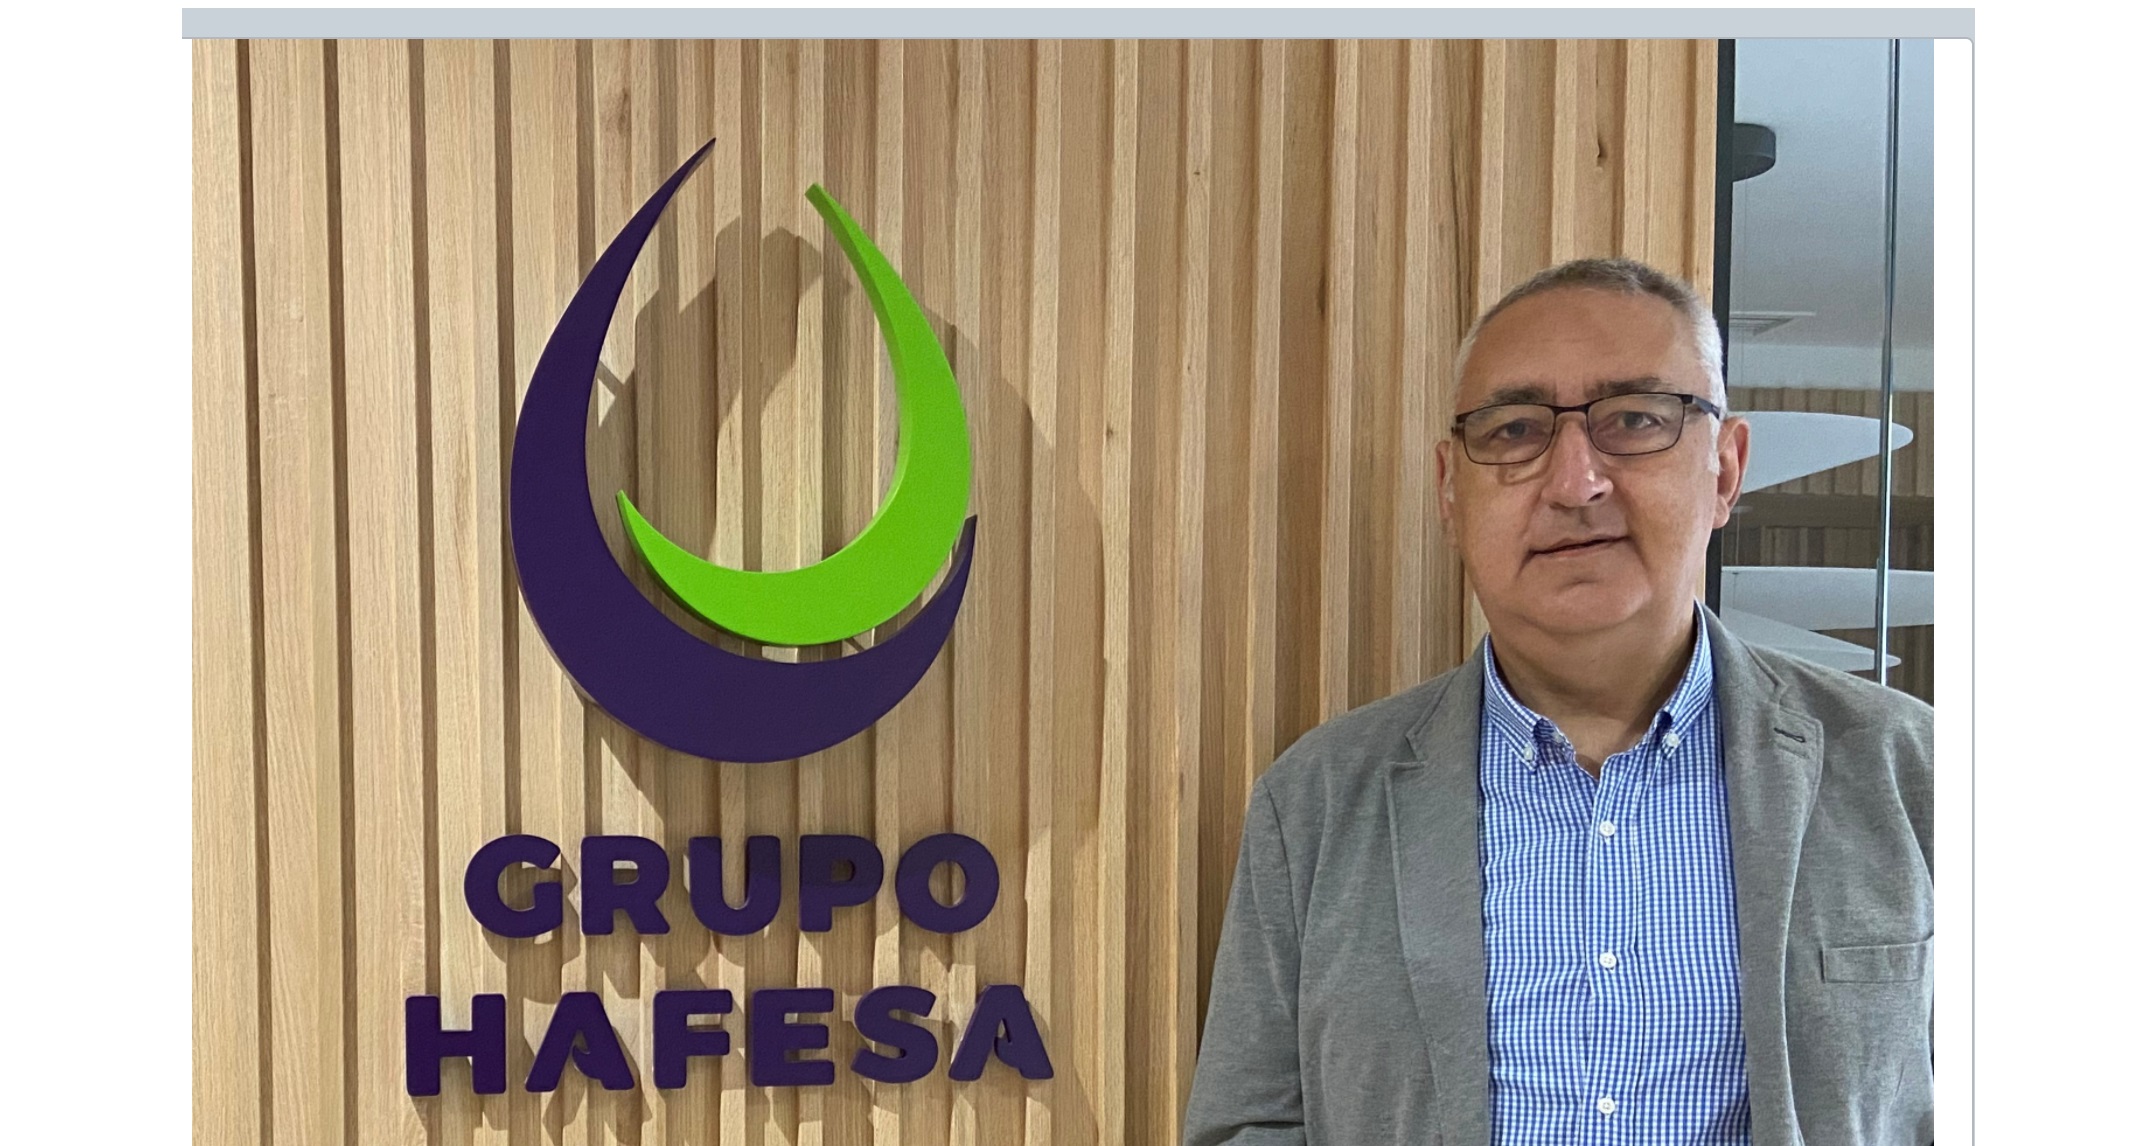 Augusto Vázquez, grupo hafesa, dircom, programapublicidad